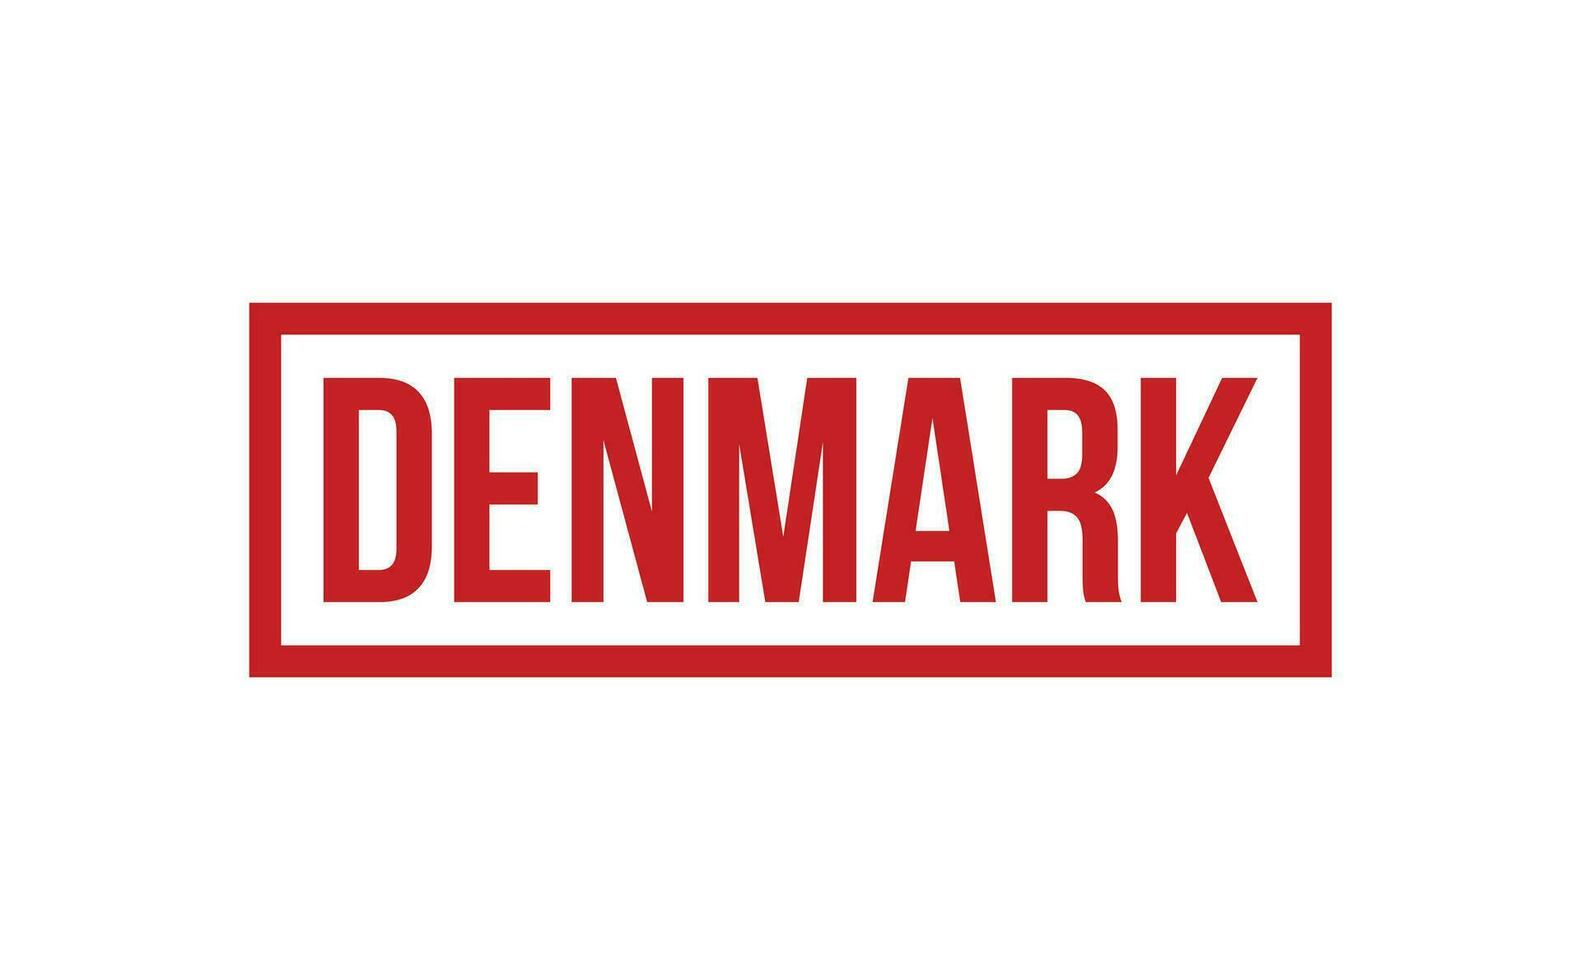 Dinamarca borracha carimbo foca vetor